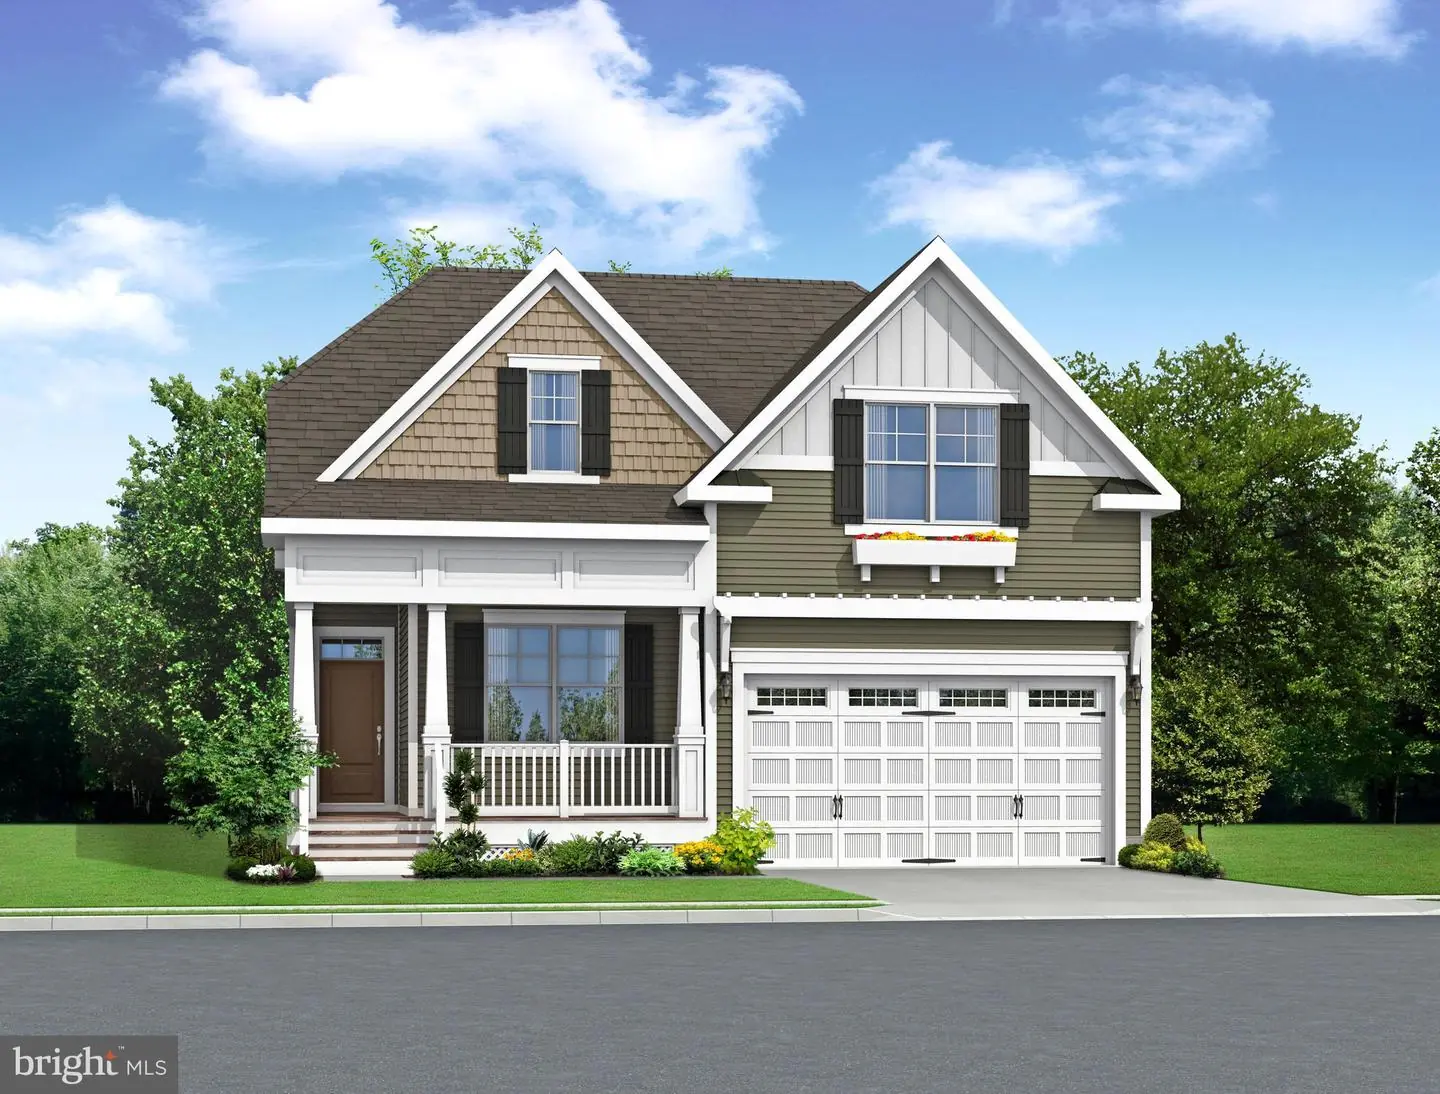 DESU2031440-801988062082-2022-11-02-11-01-30 Iris To-be-built Home Tbd | Millsboro, DE Real Estate For Sale | MLS# Desu2031440  - David T. King Realtor